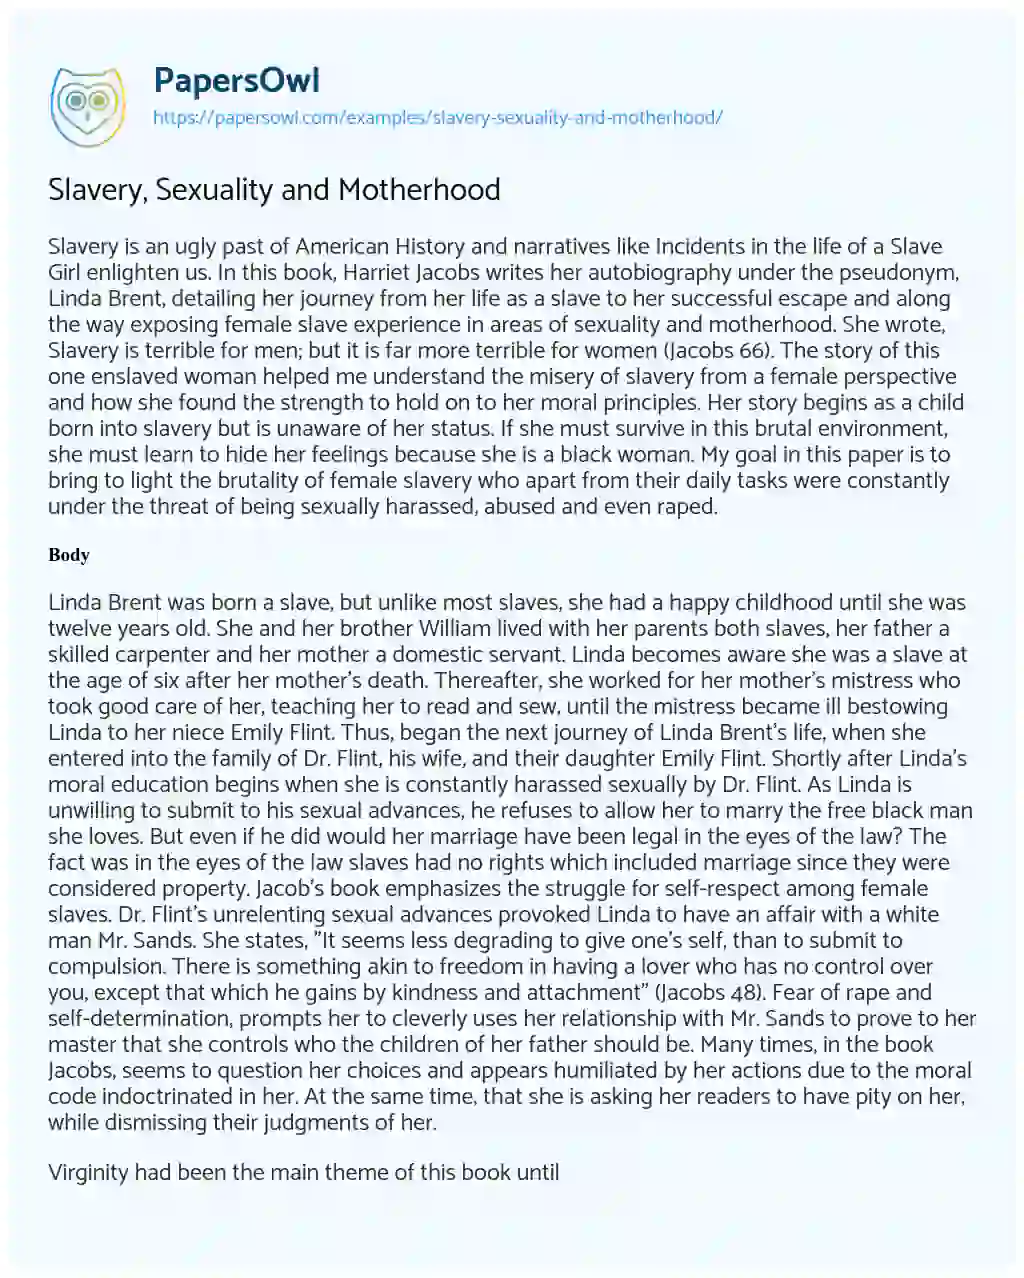 Essay on Slavery, Sexuality and Motherhood